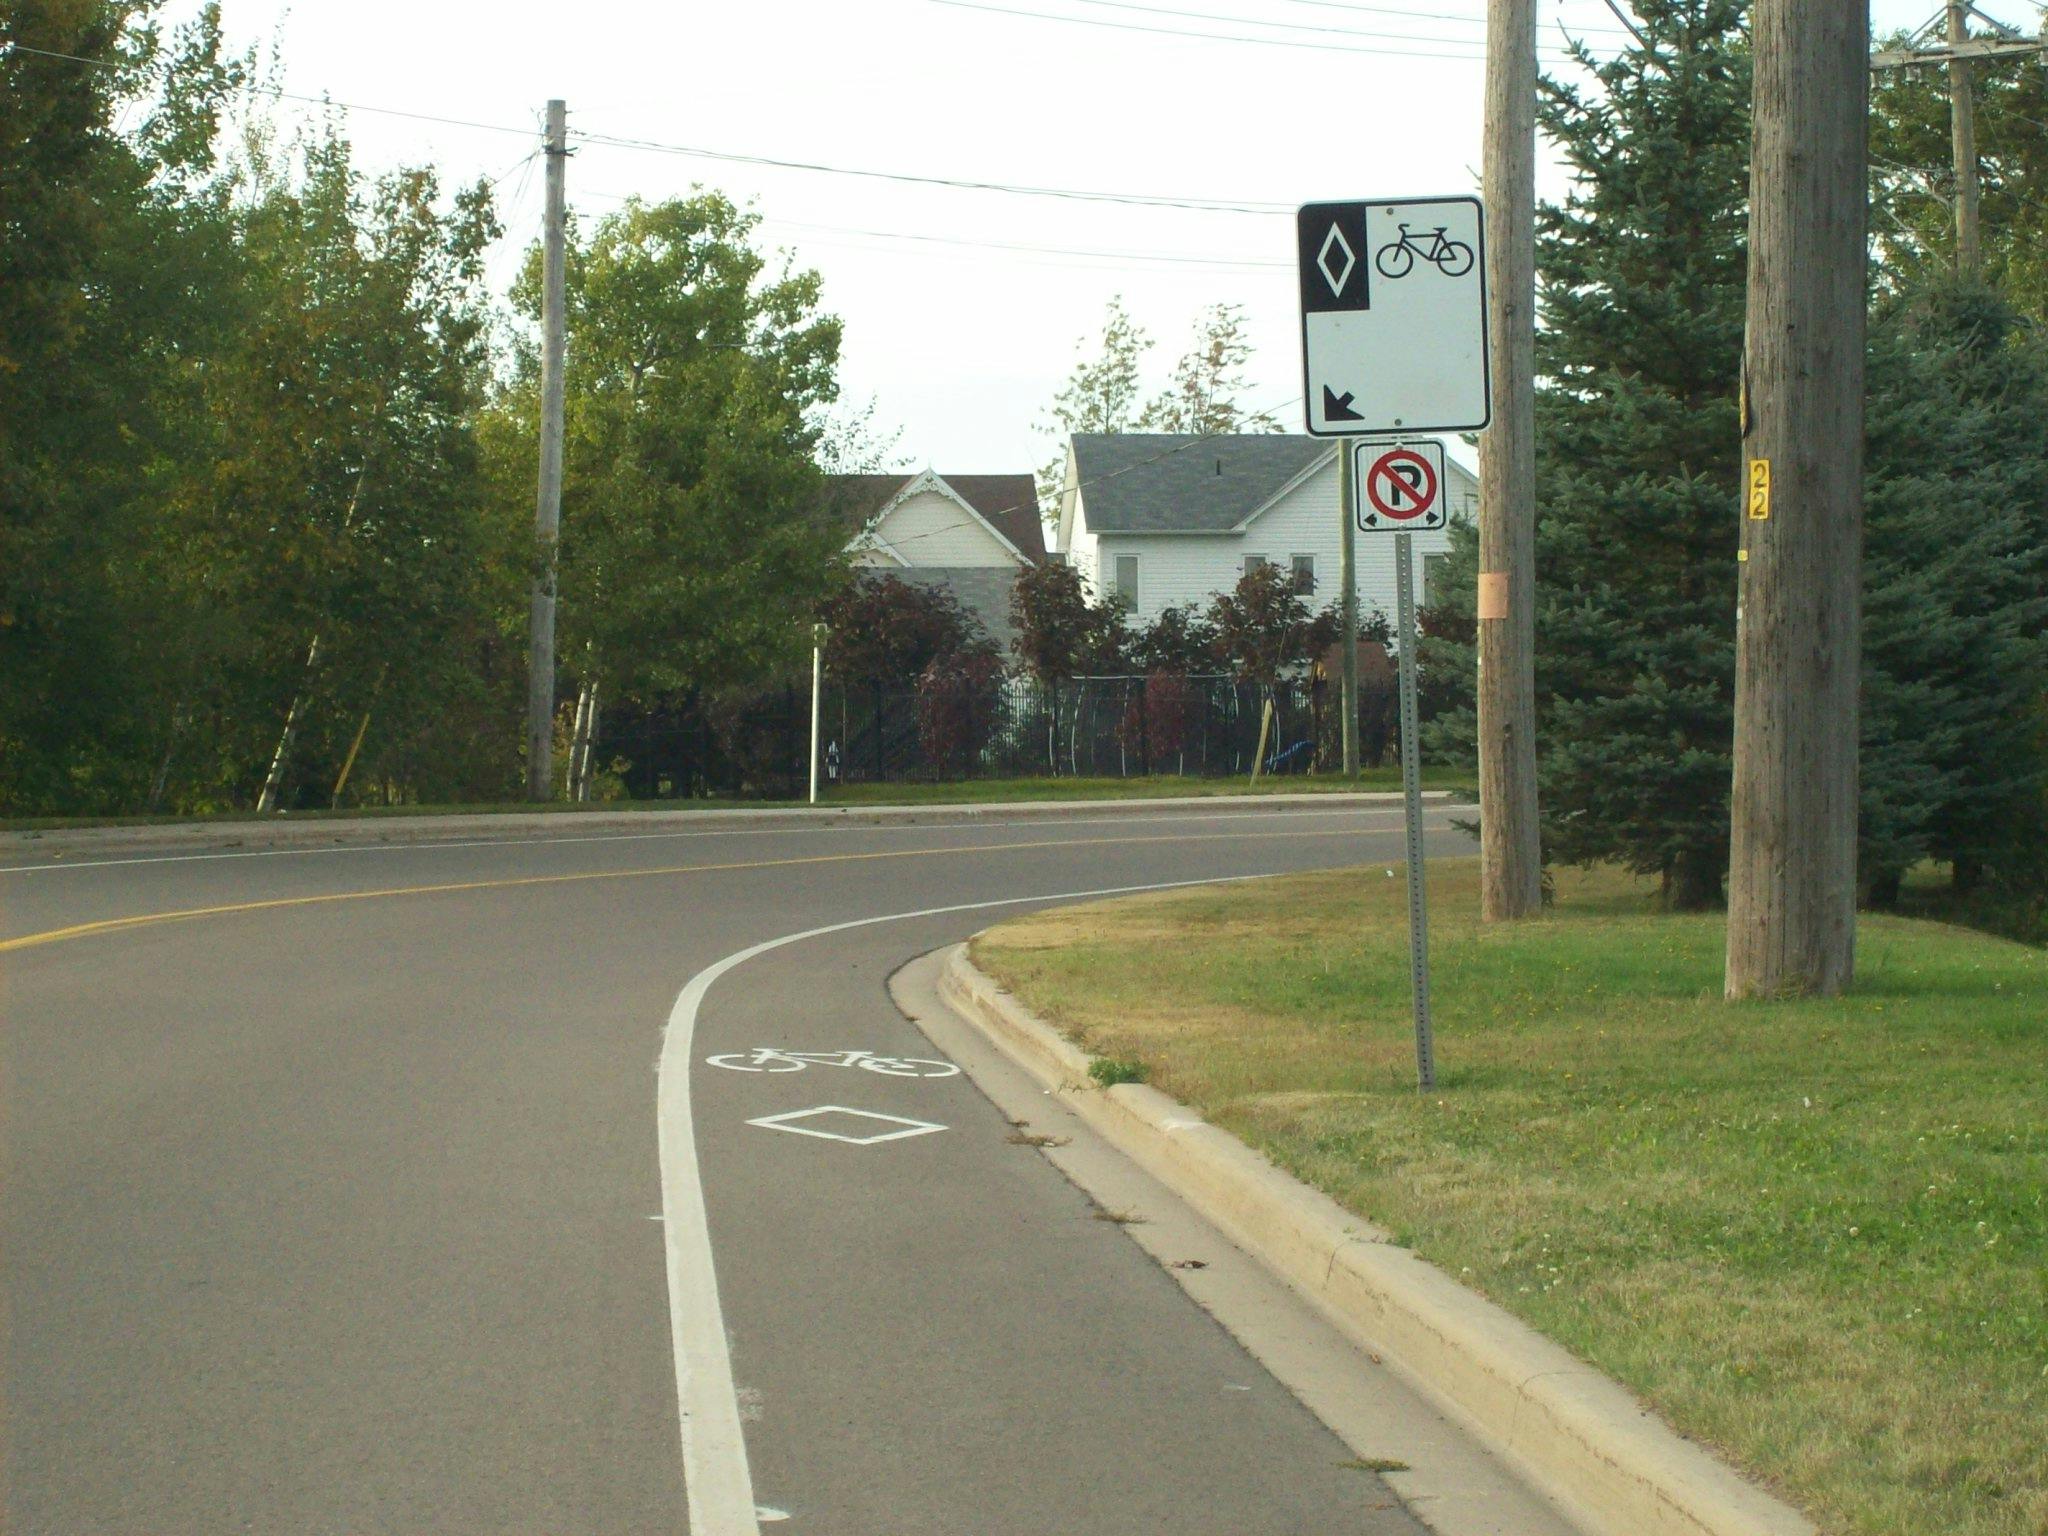 Bike lane - Ryan Street